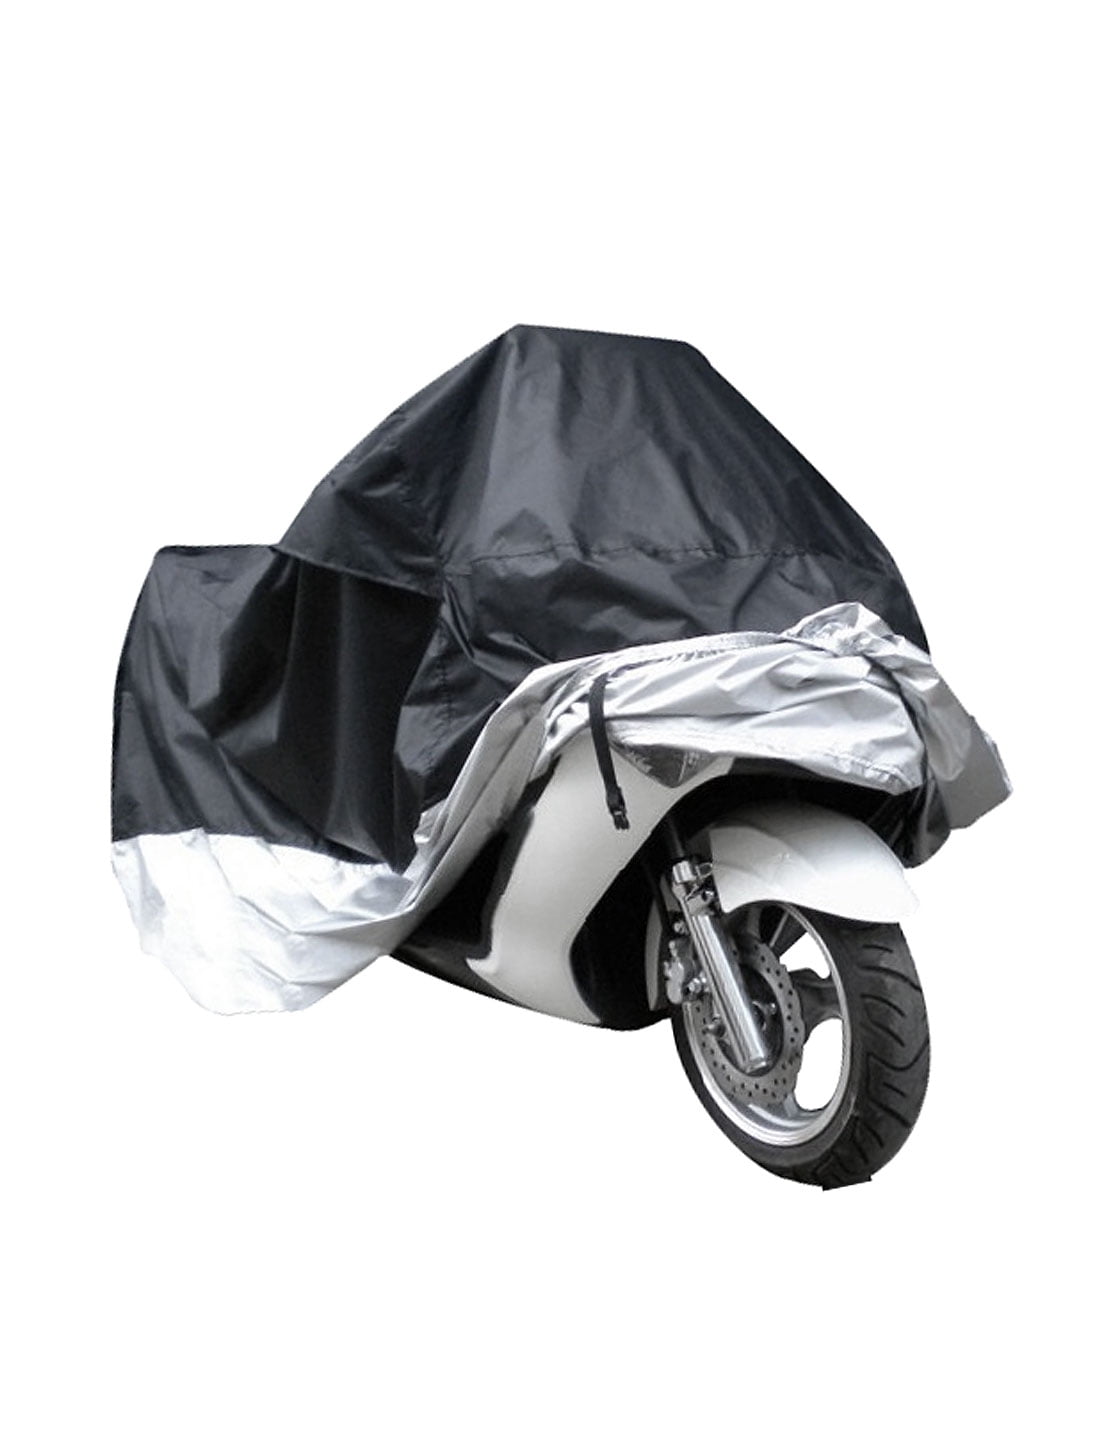 Honda Helix NEW Motorcycle Cover C XL 5